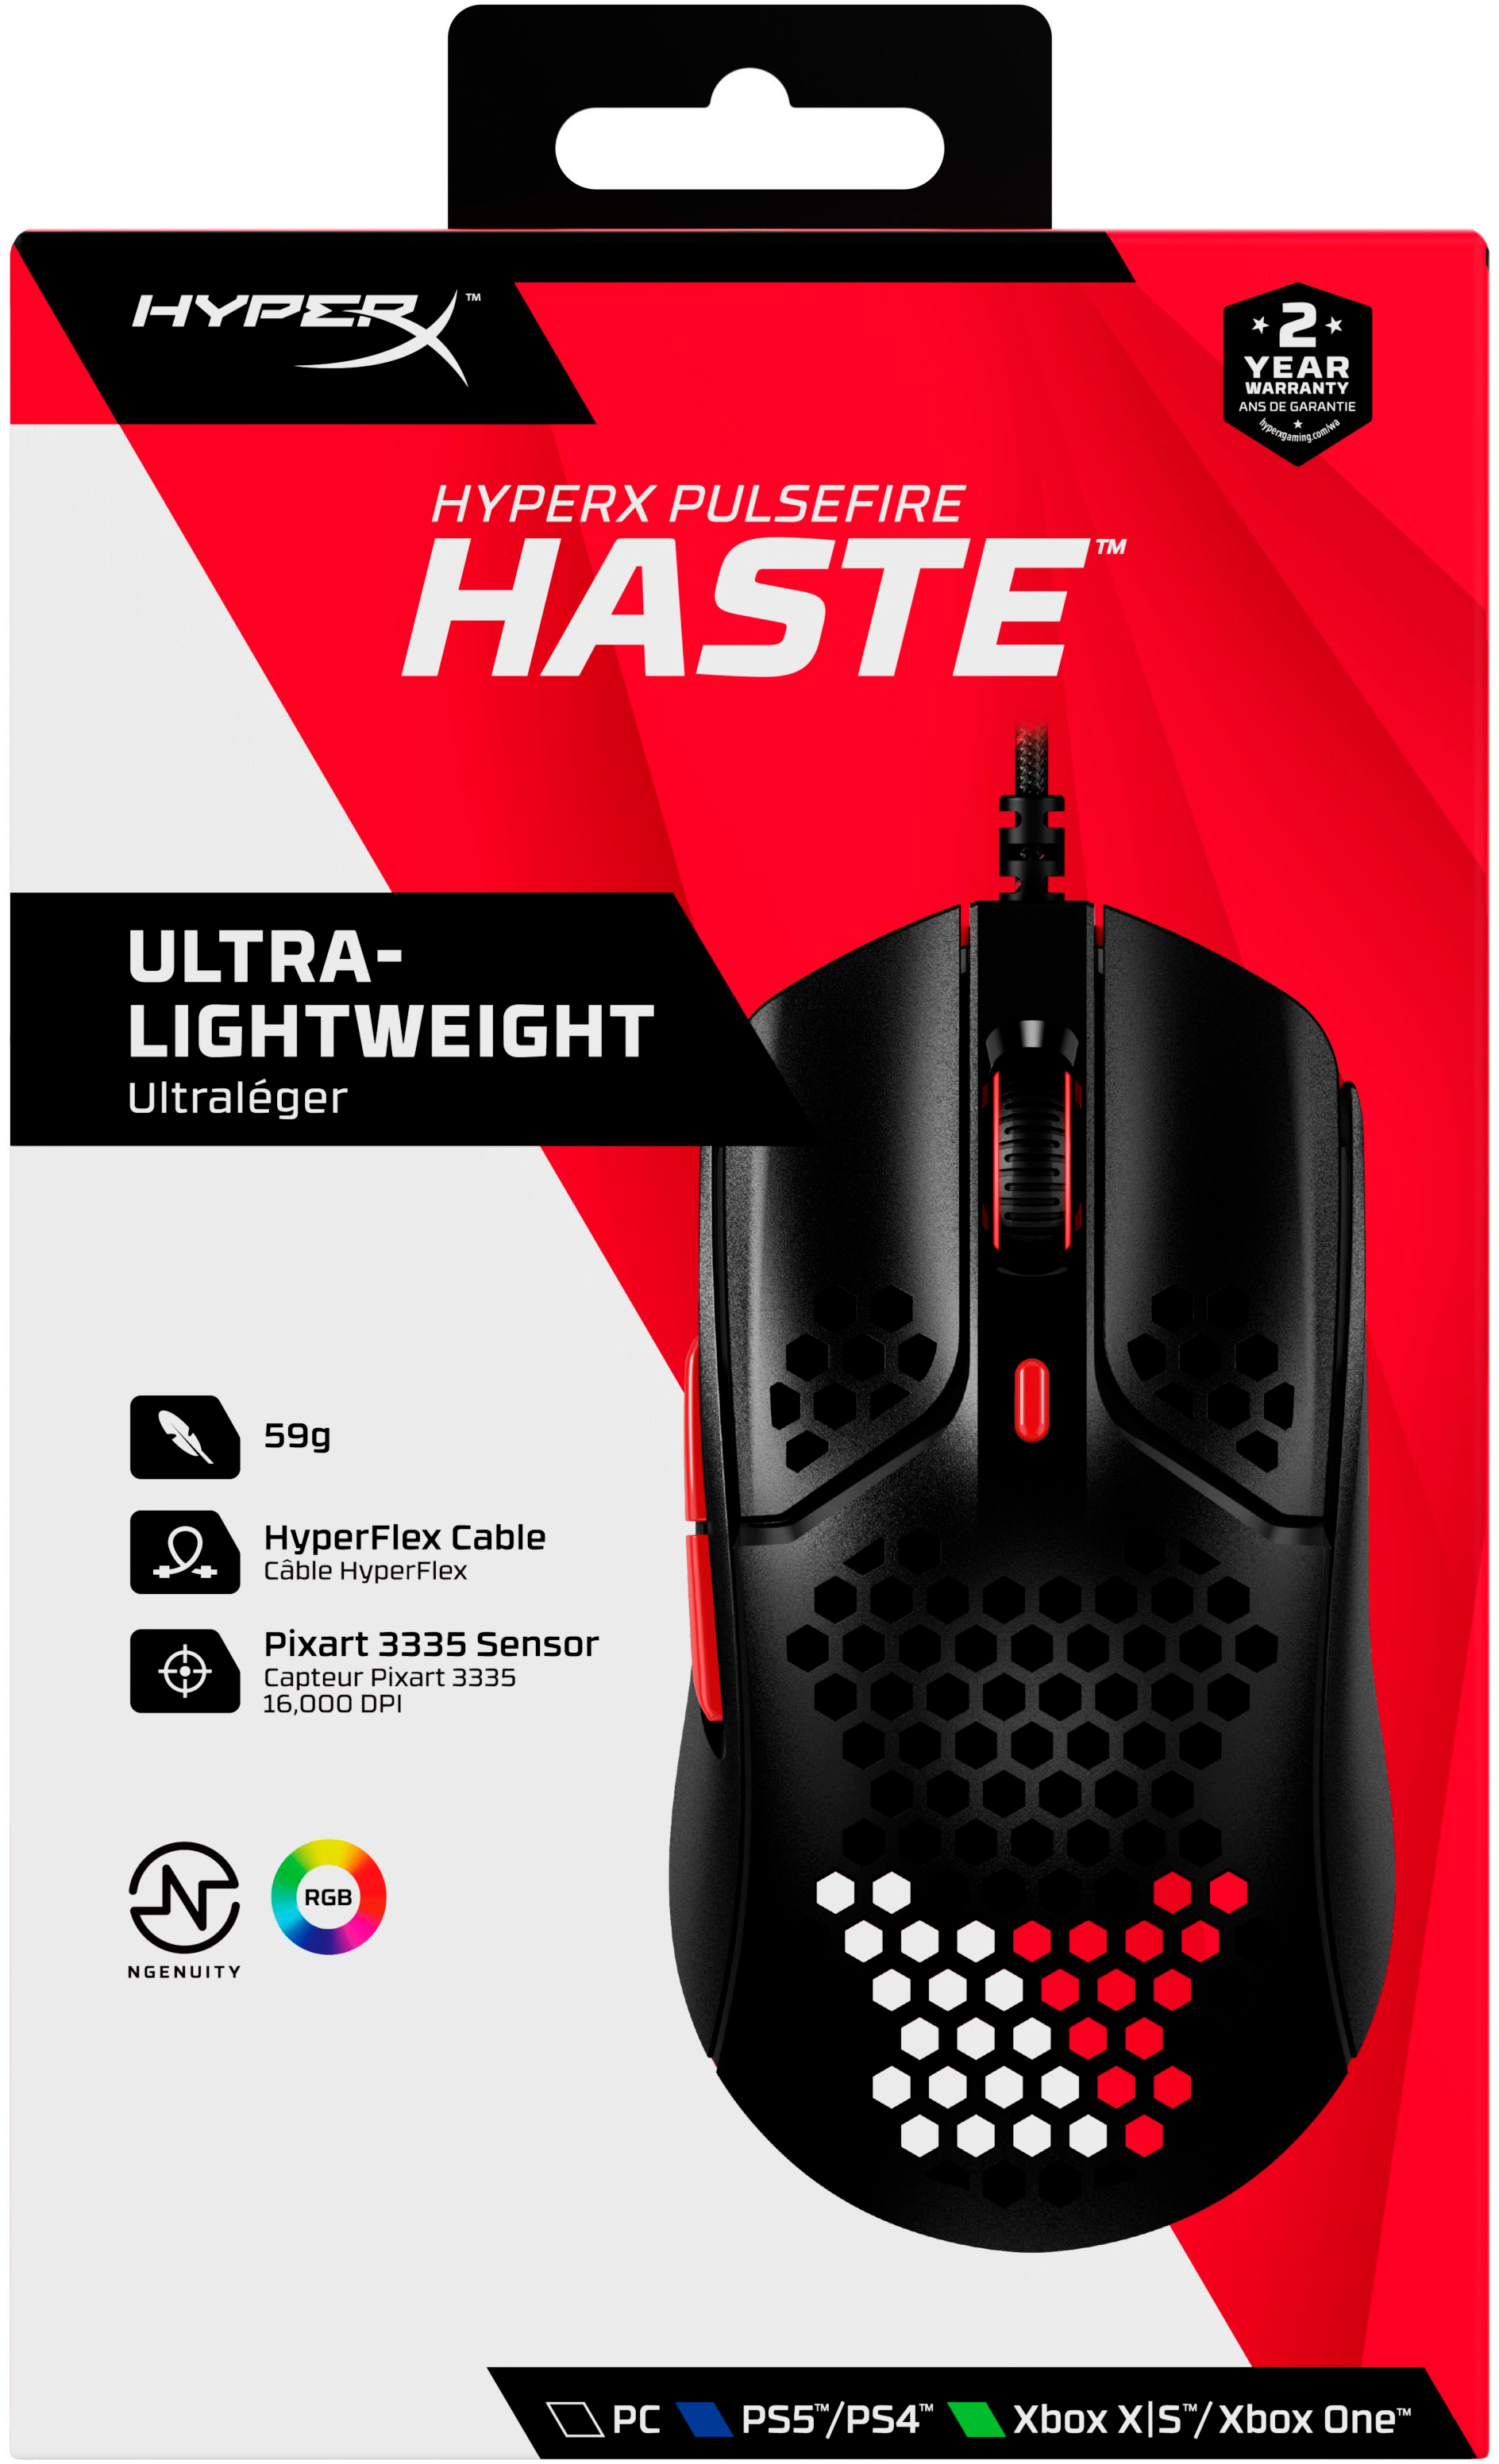 HyperX Pulsefire Haste Wireless review: An esports-worthy wireless